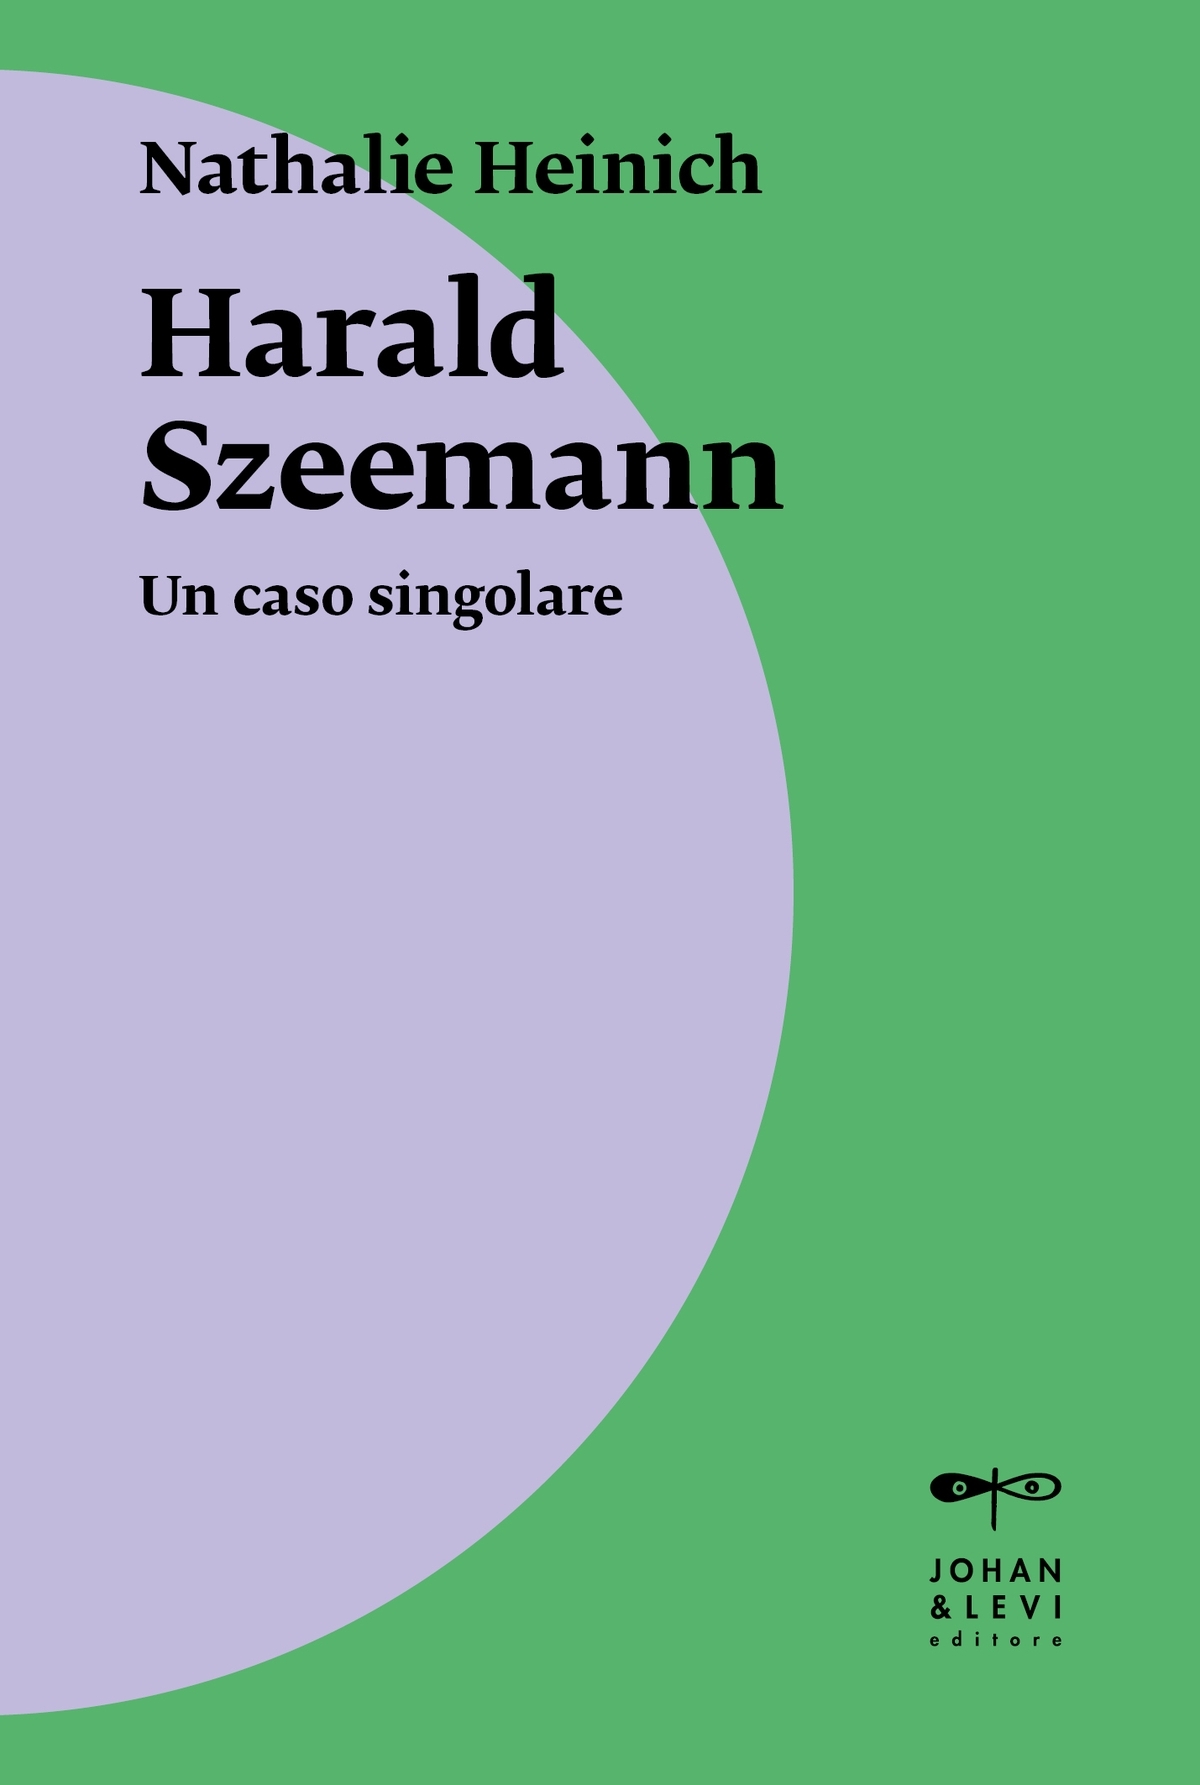 Nathalie Heinich – Harald Szeemann. Un caso singolare (Johan & Levi, Monza 2021)